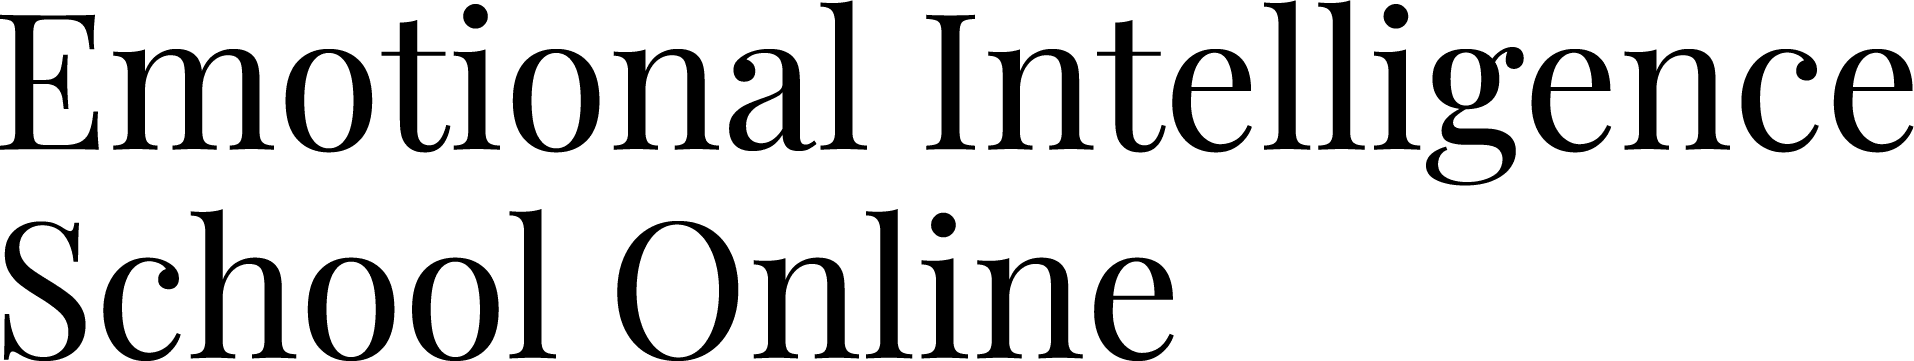 Emotional Intelligence School Online